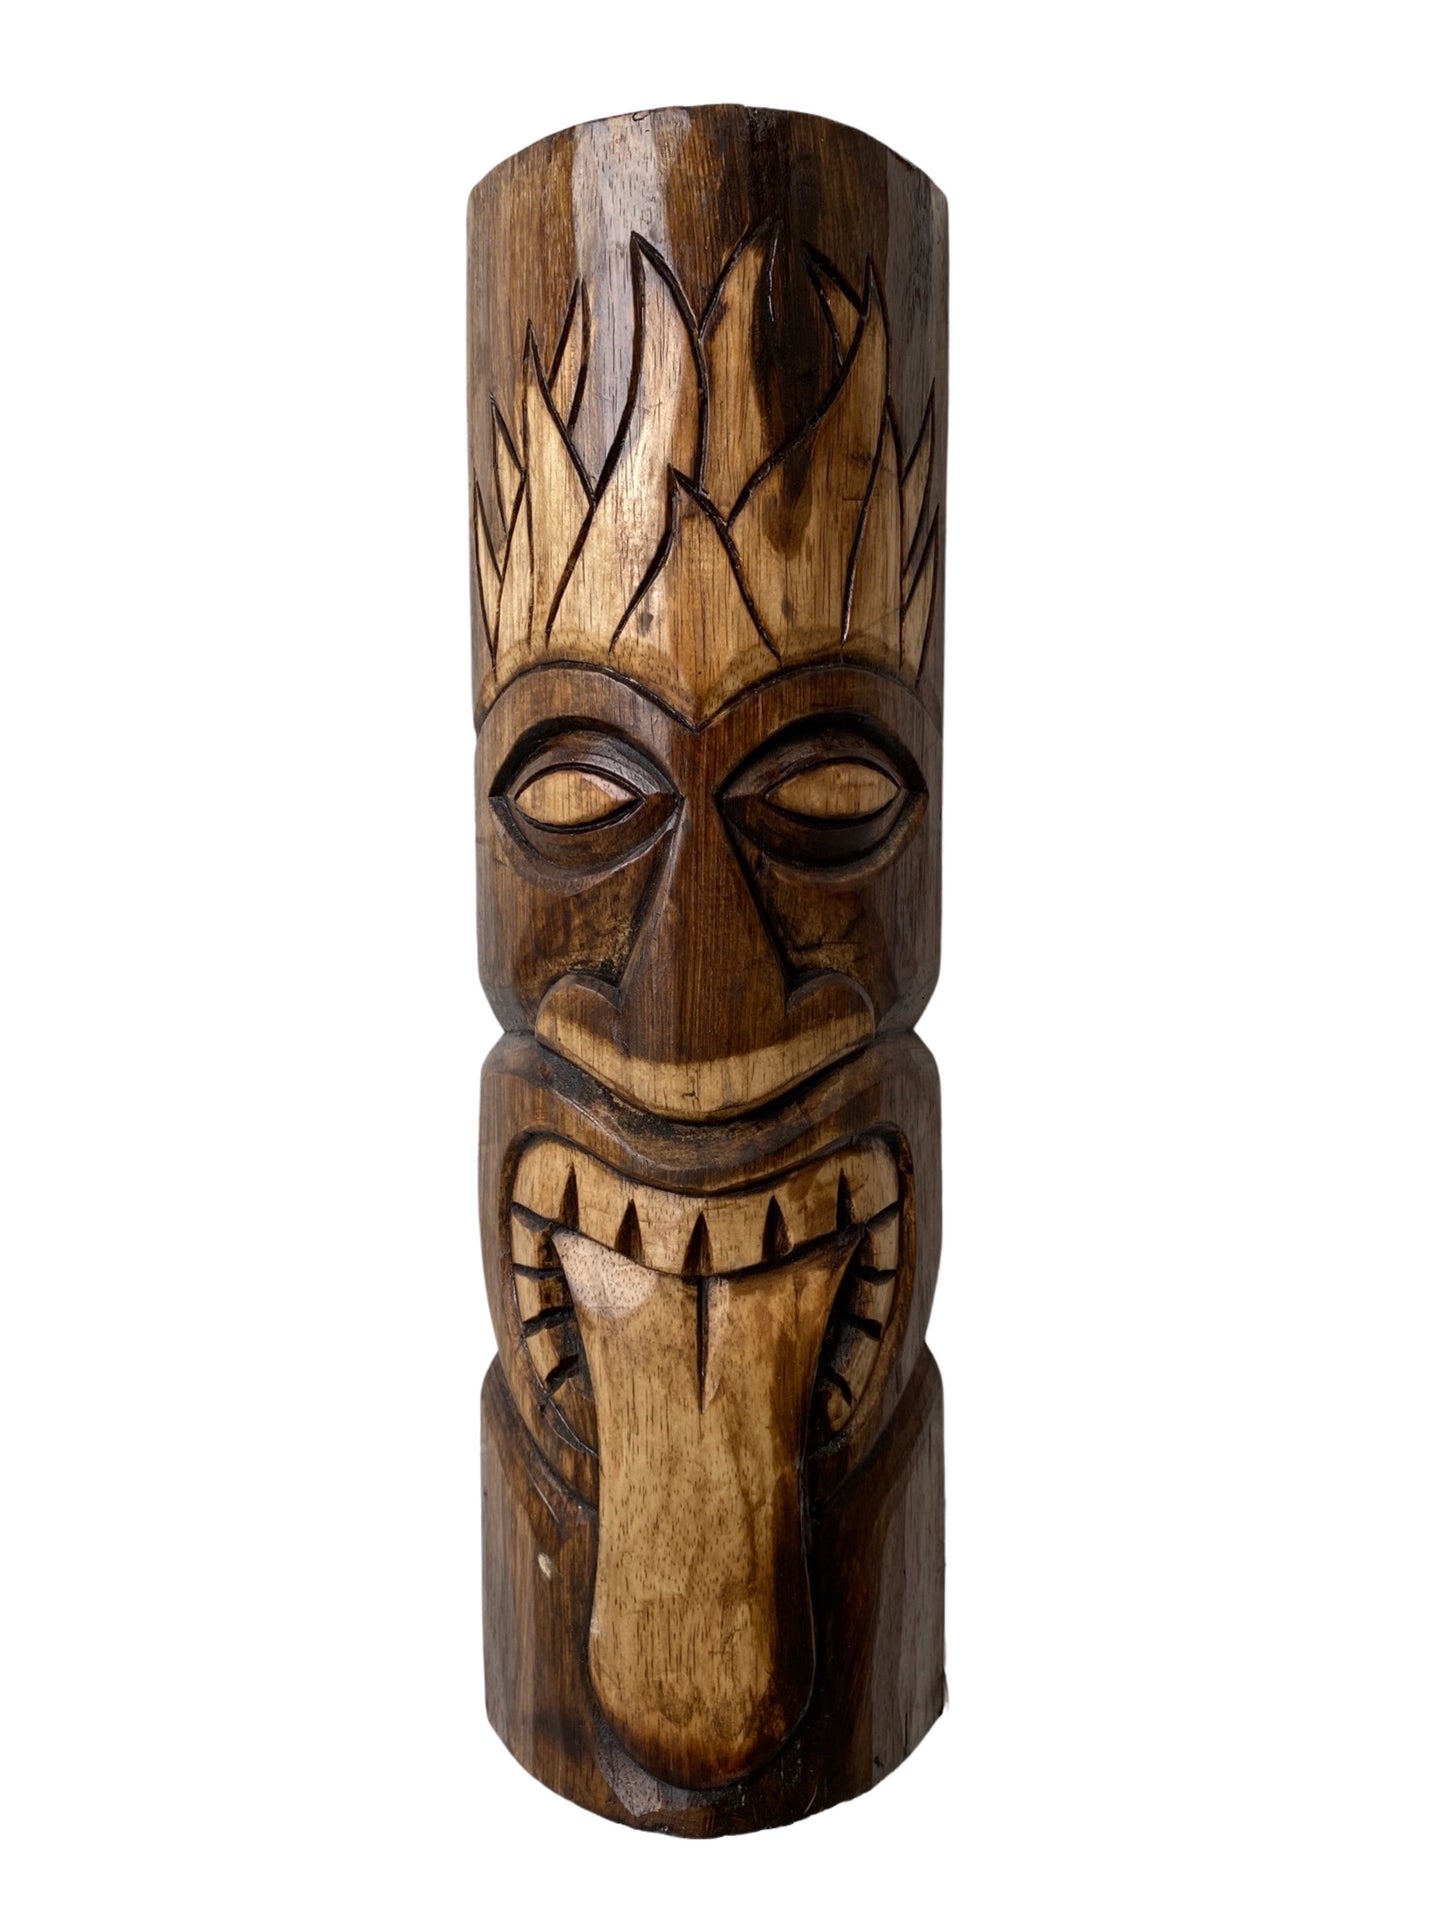 Wooden Tribal Masks